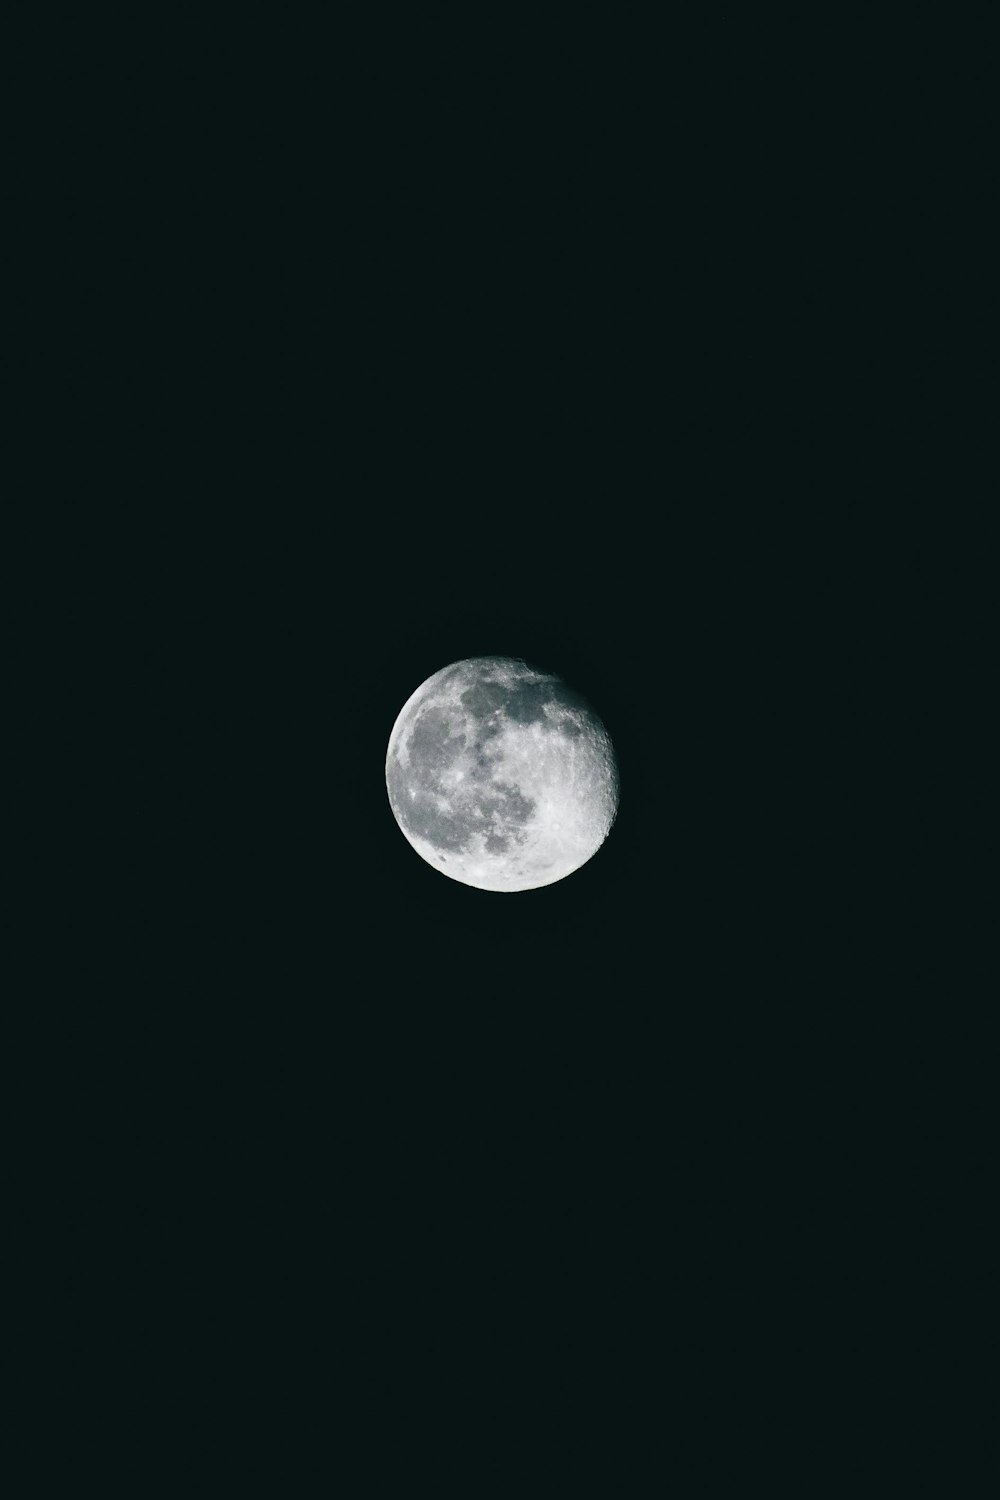 a full moon is seen in the dark sky